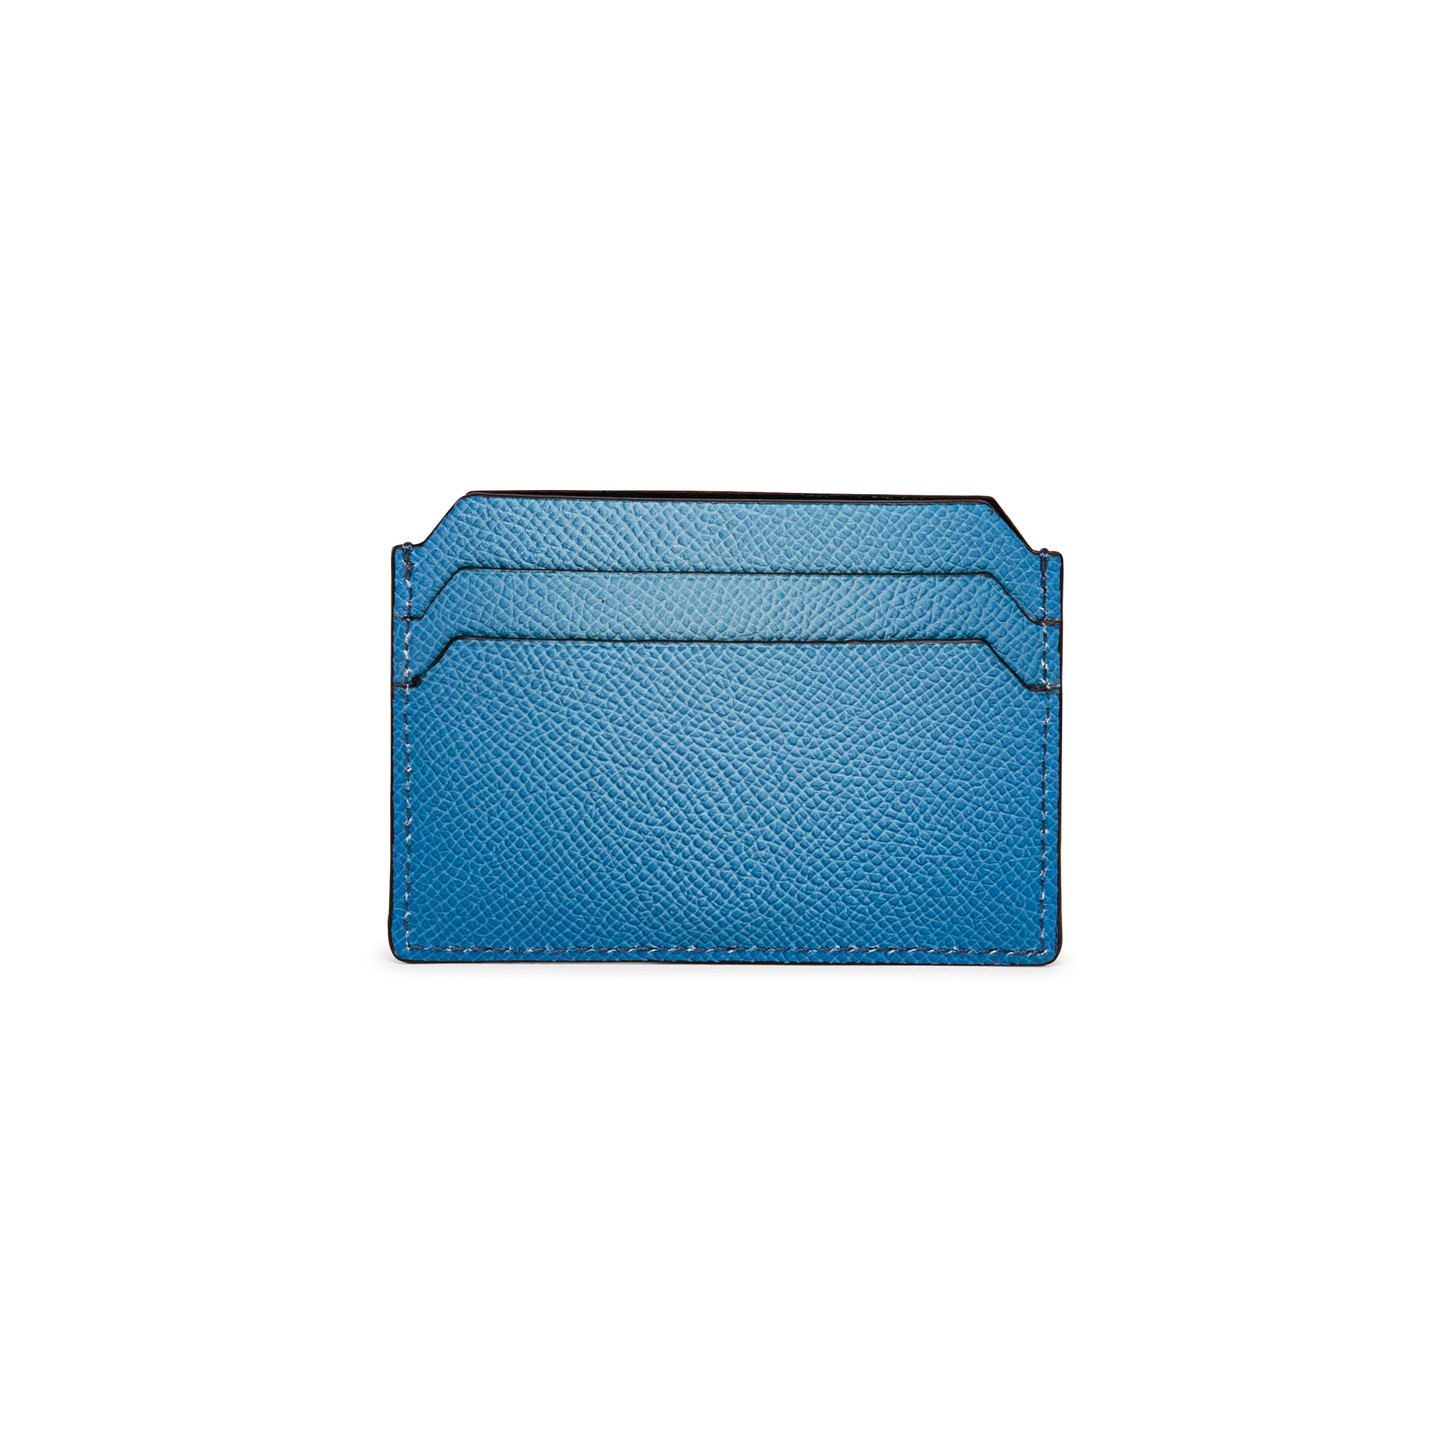 Light blue saffiano leather credit card holder - 2